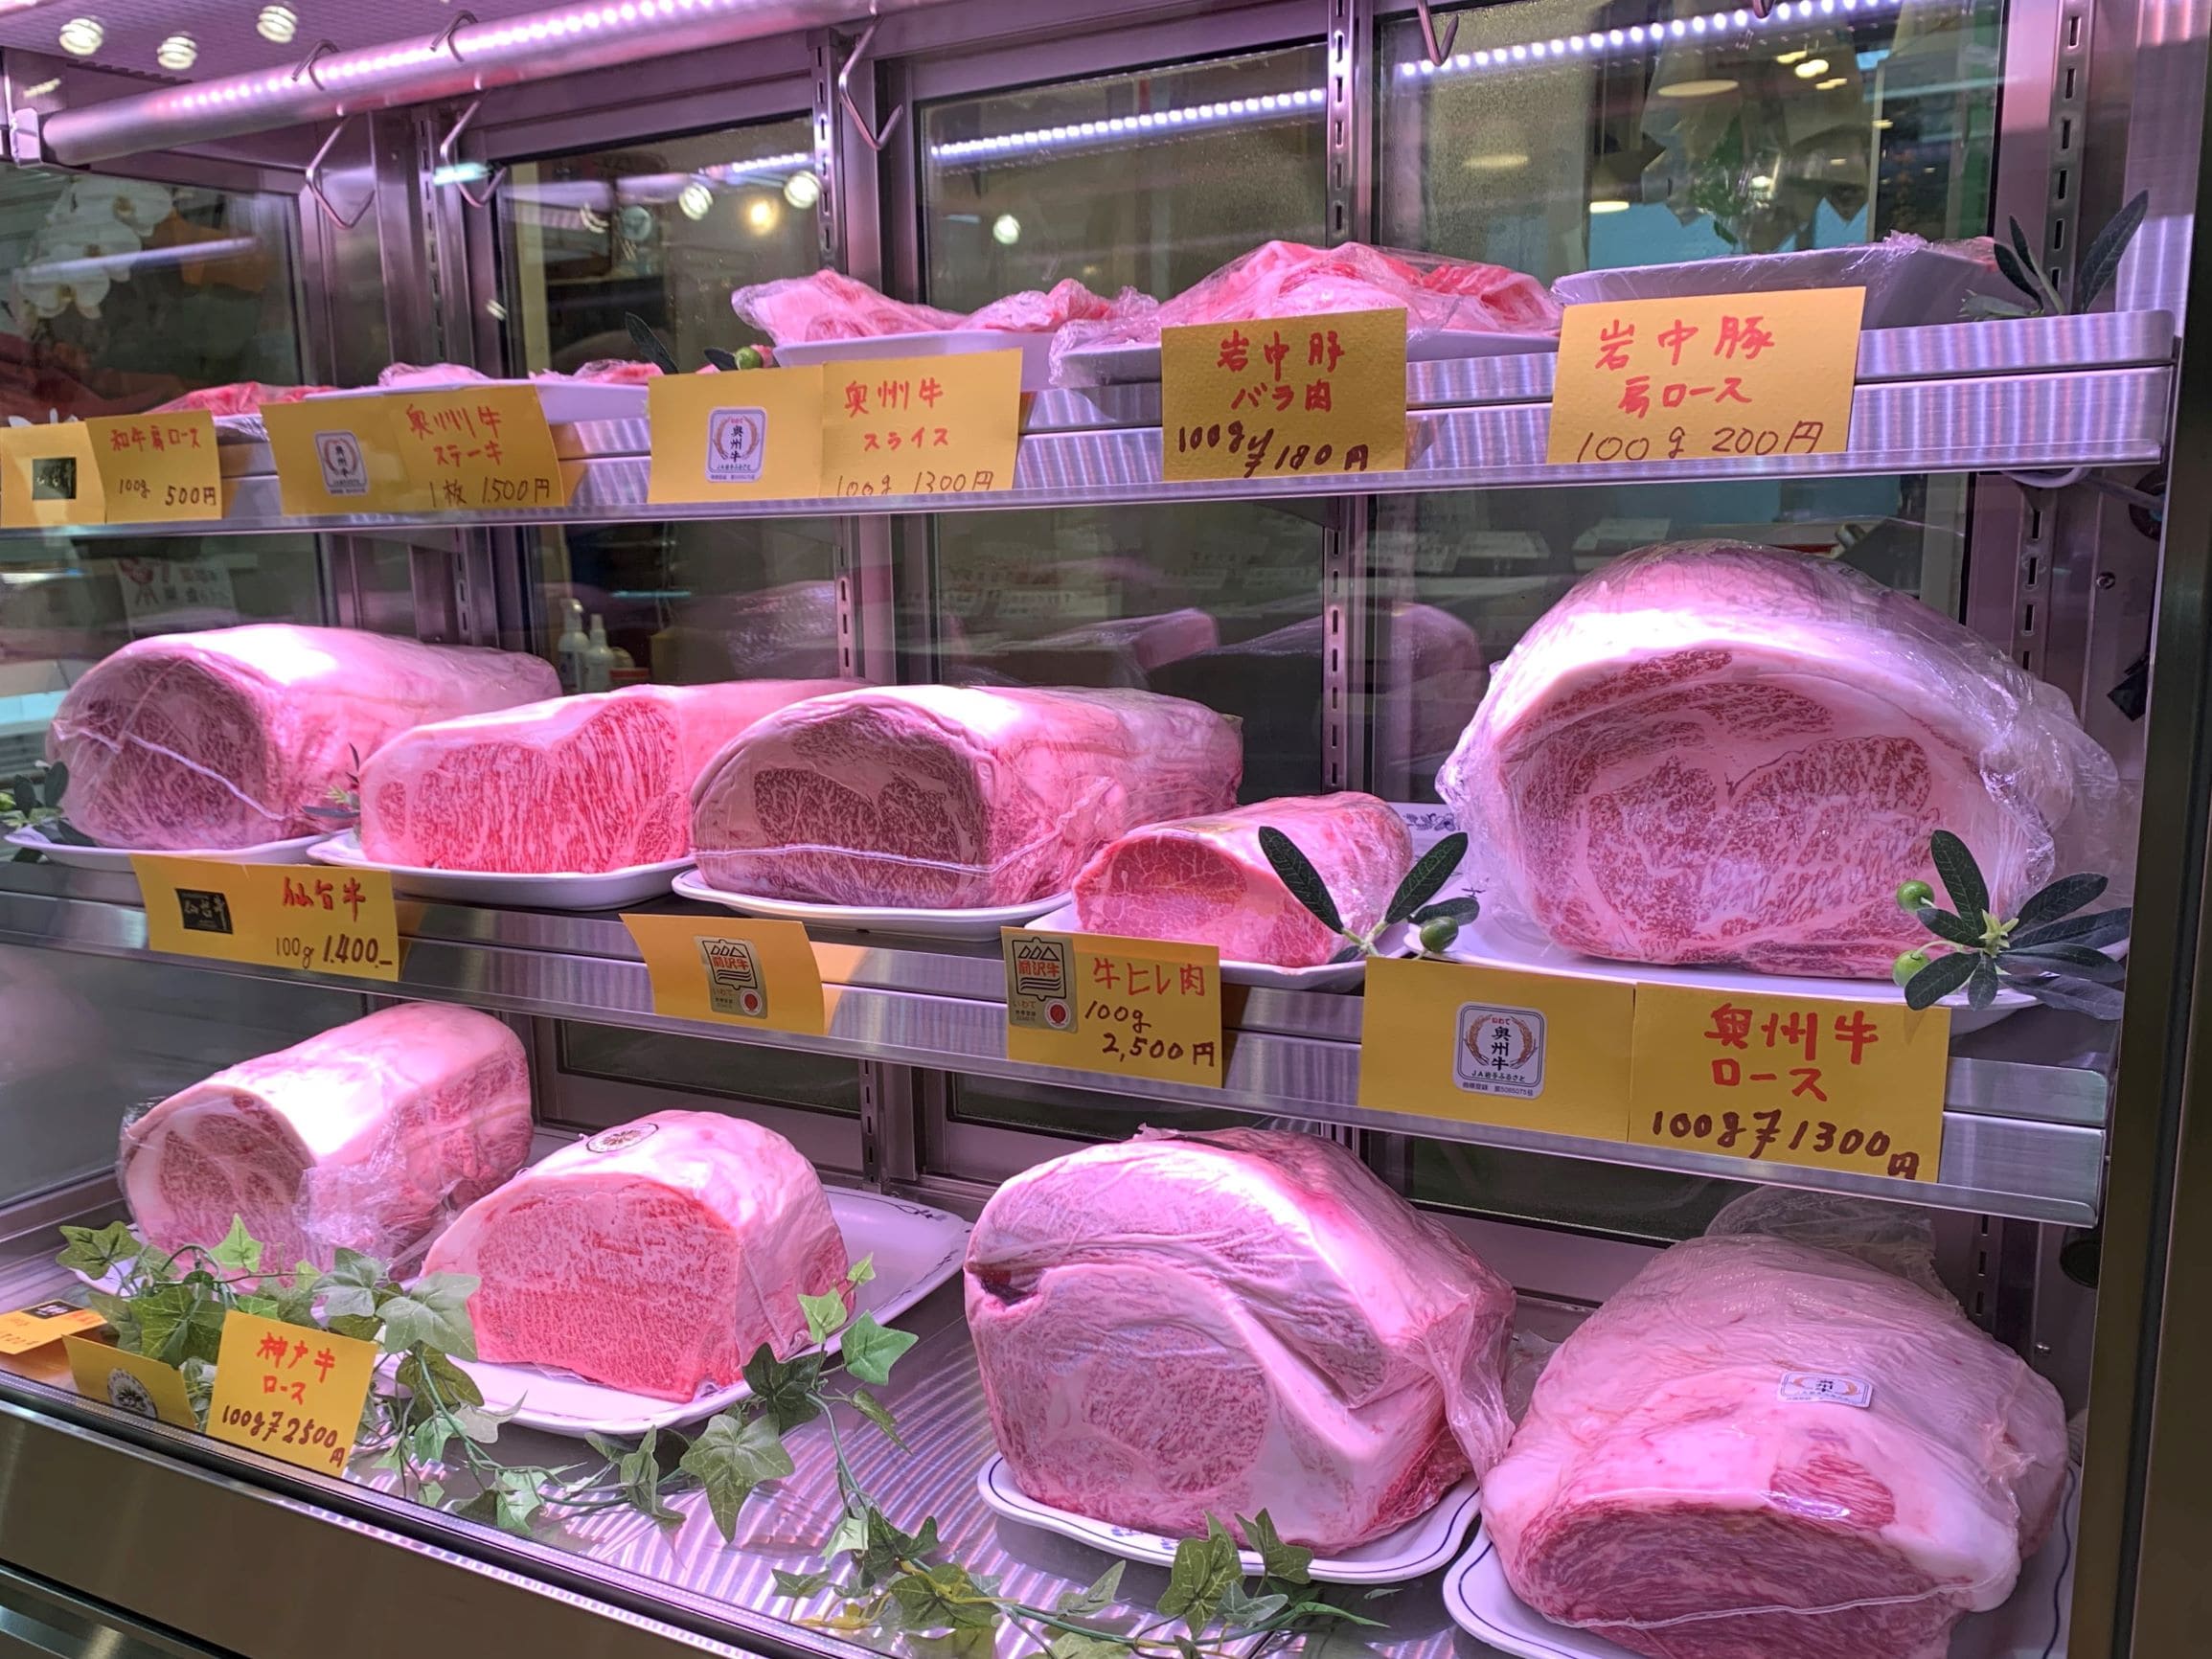 Wa-gyu,Genuine Japanese Beef ,Shimada Butcher Shop